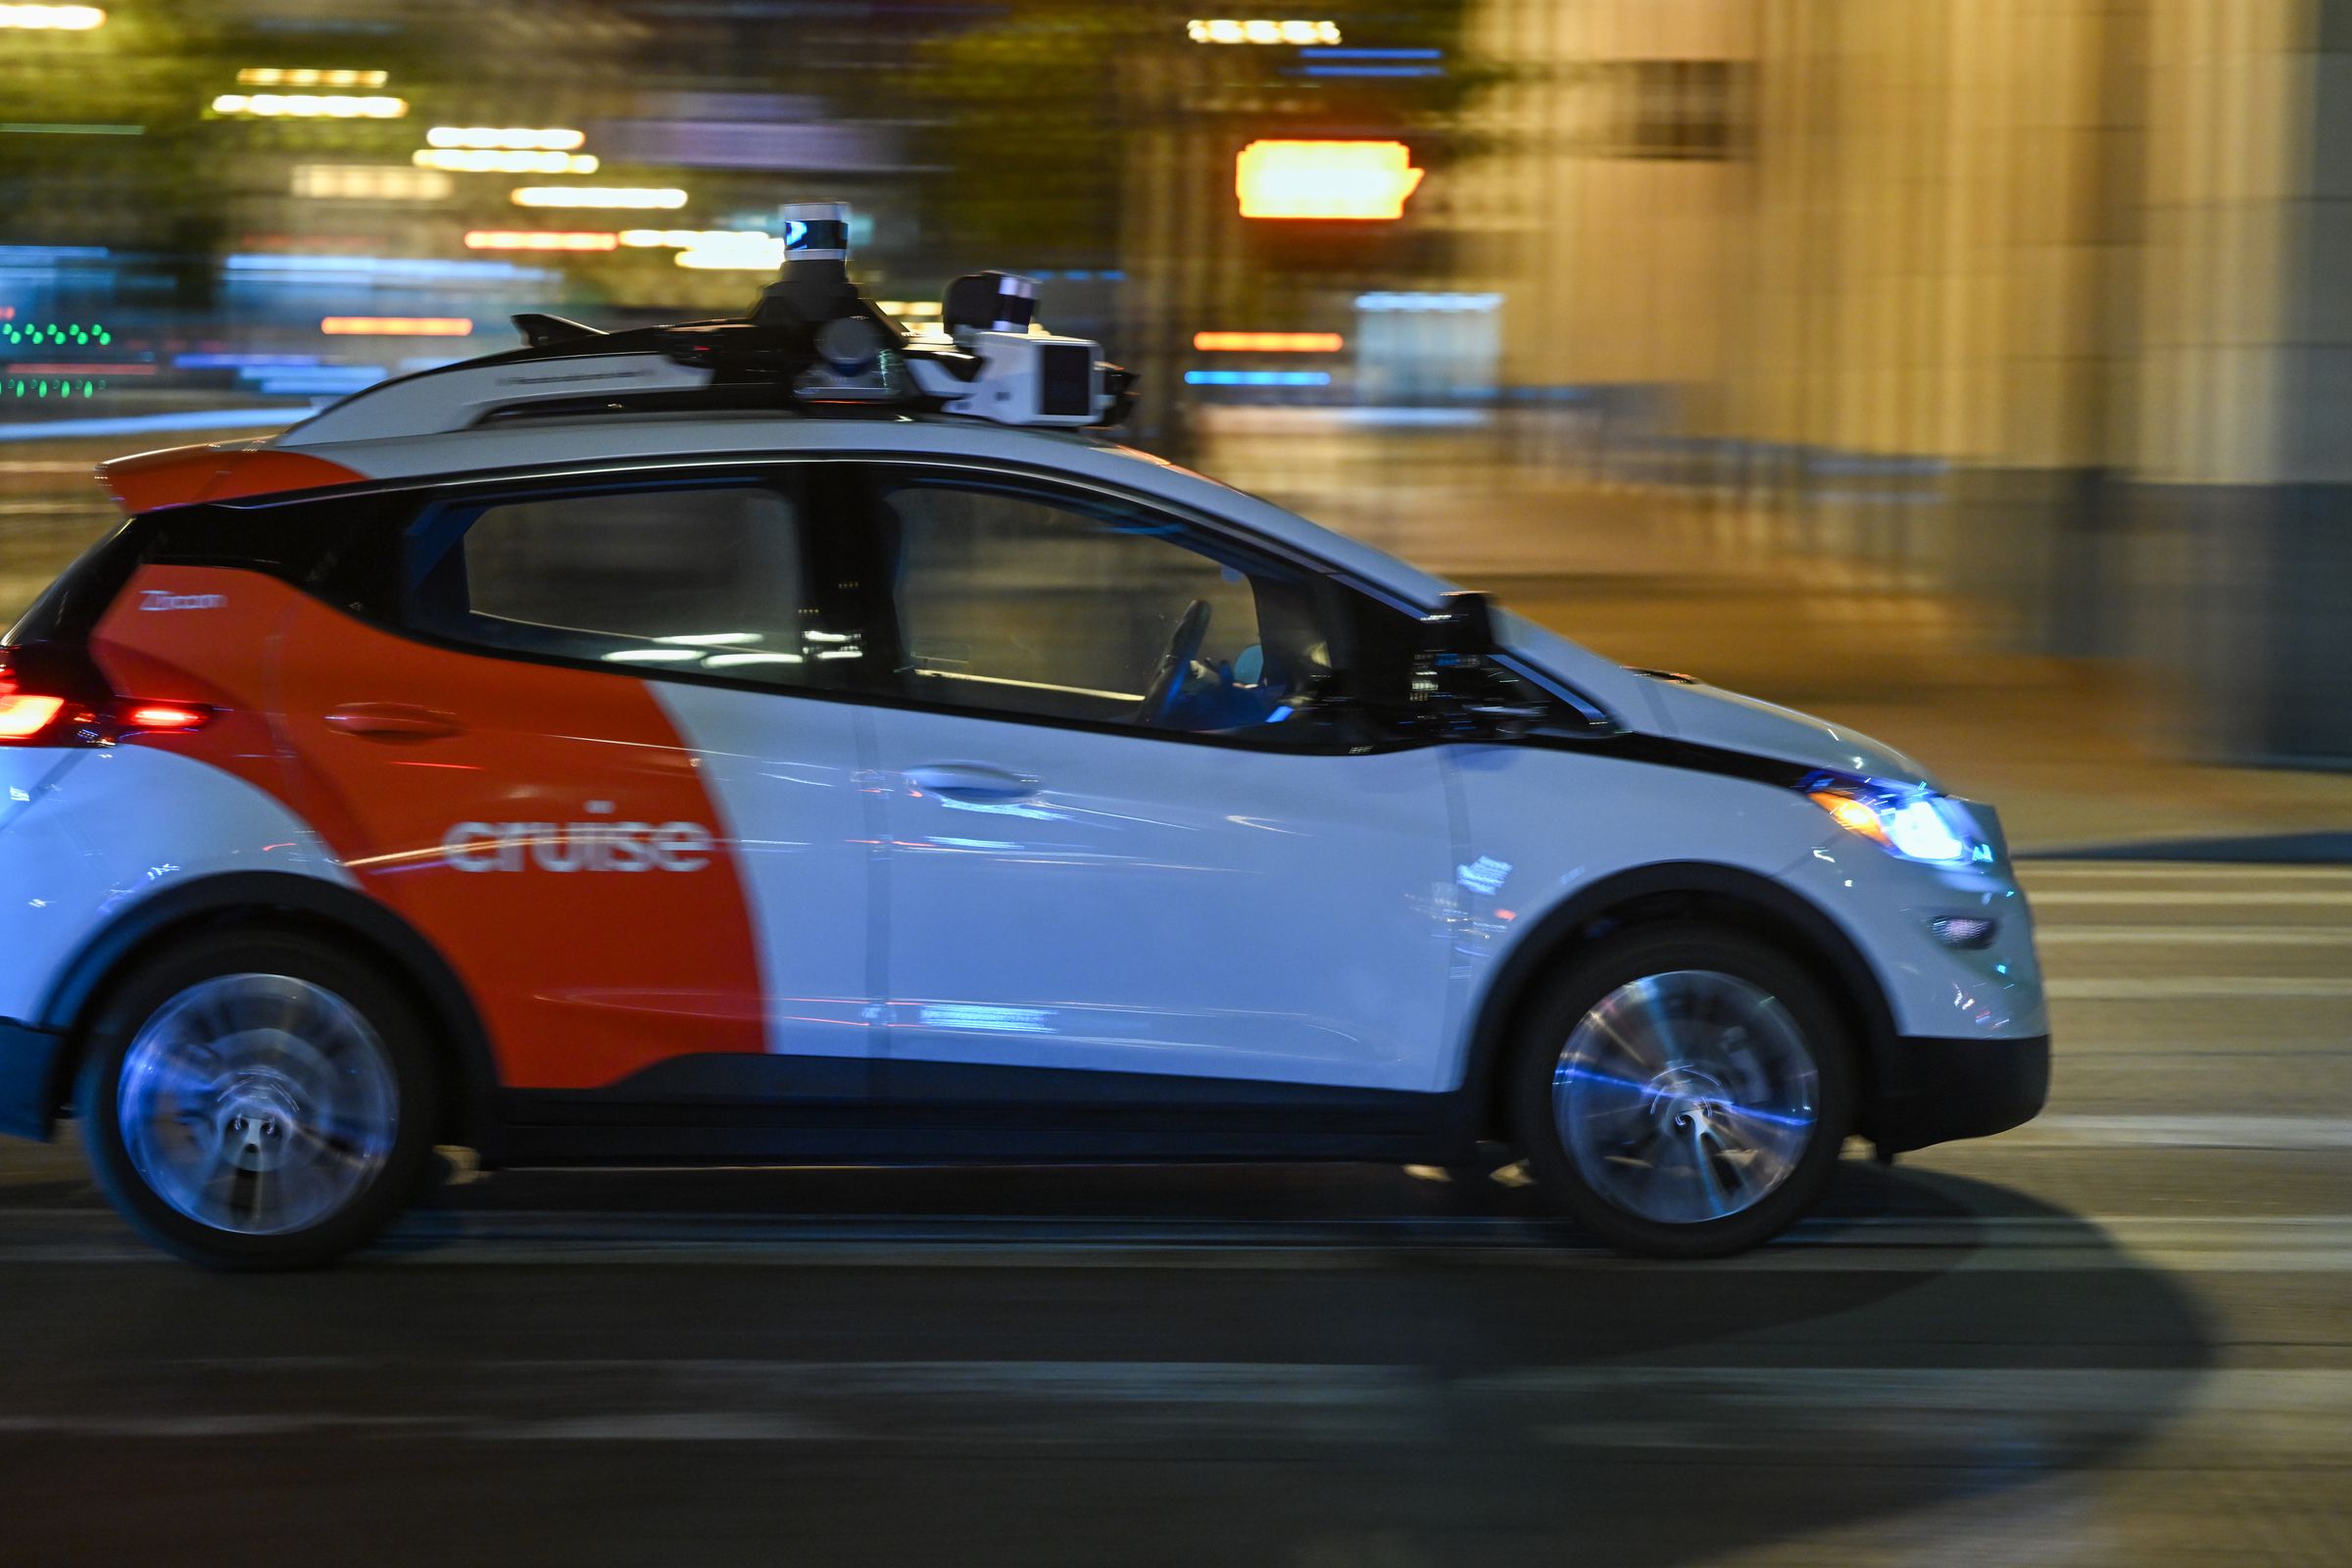 Cruise: a driverless robot taxi in San Francisco